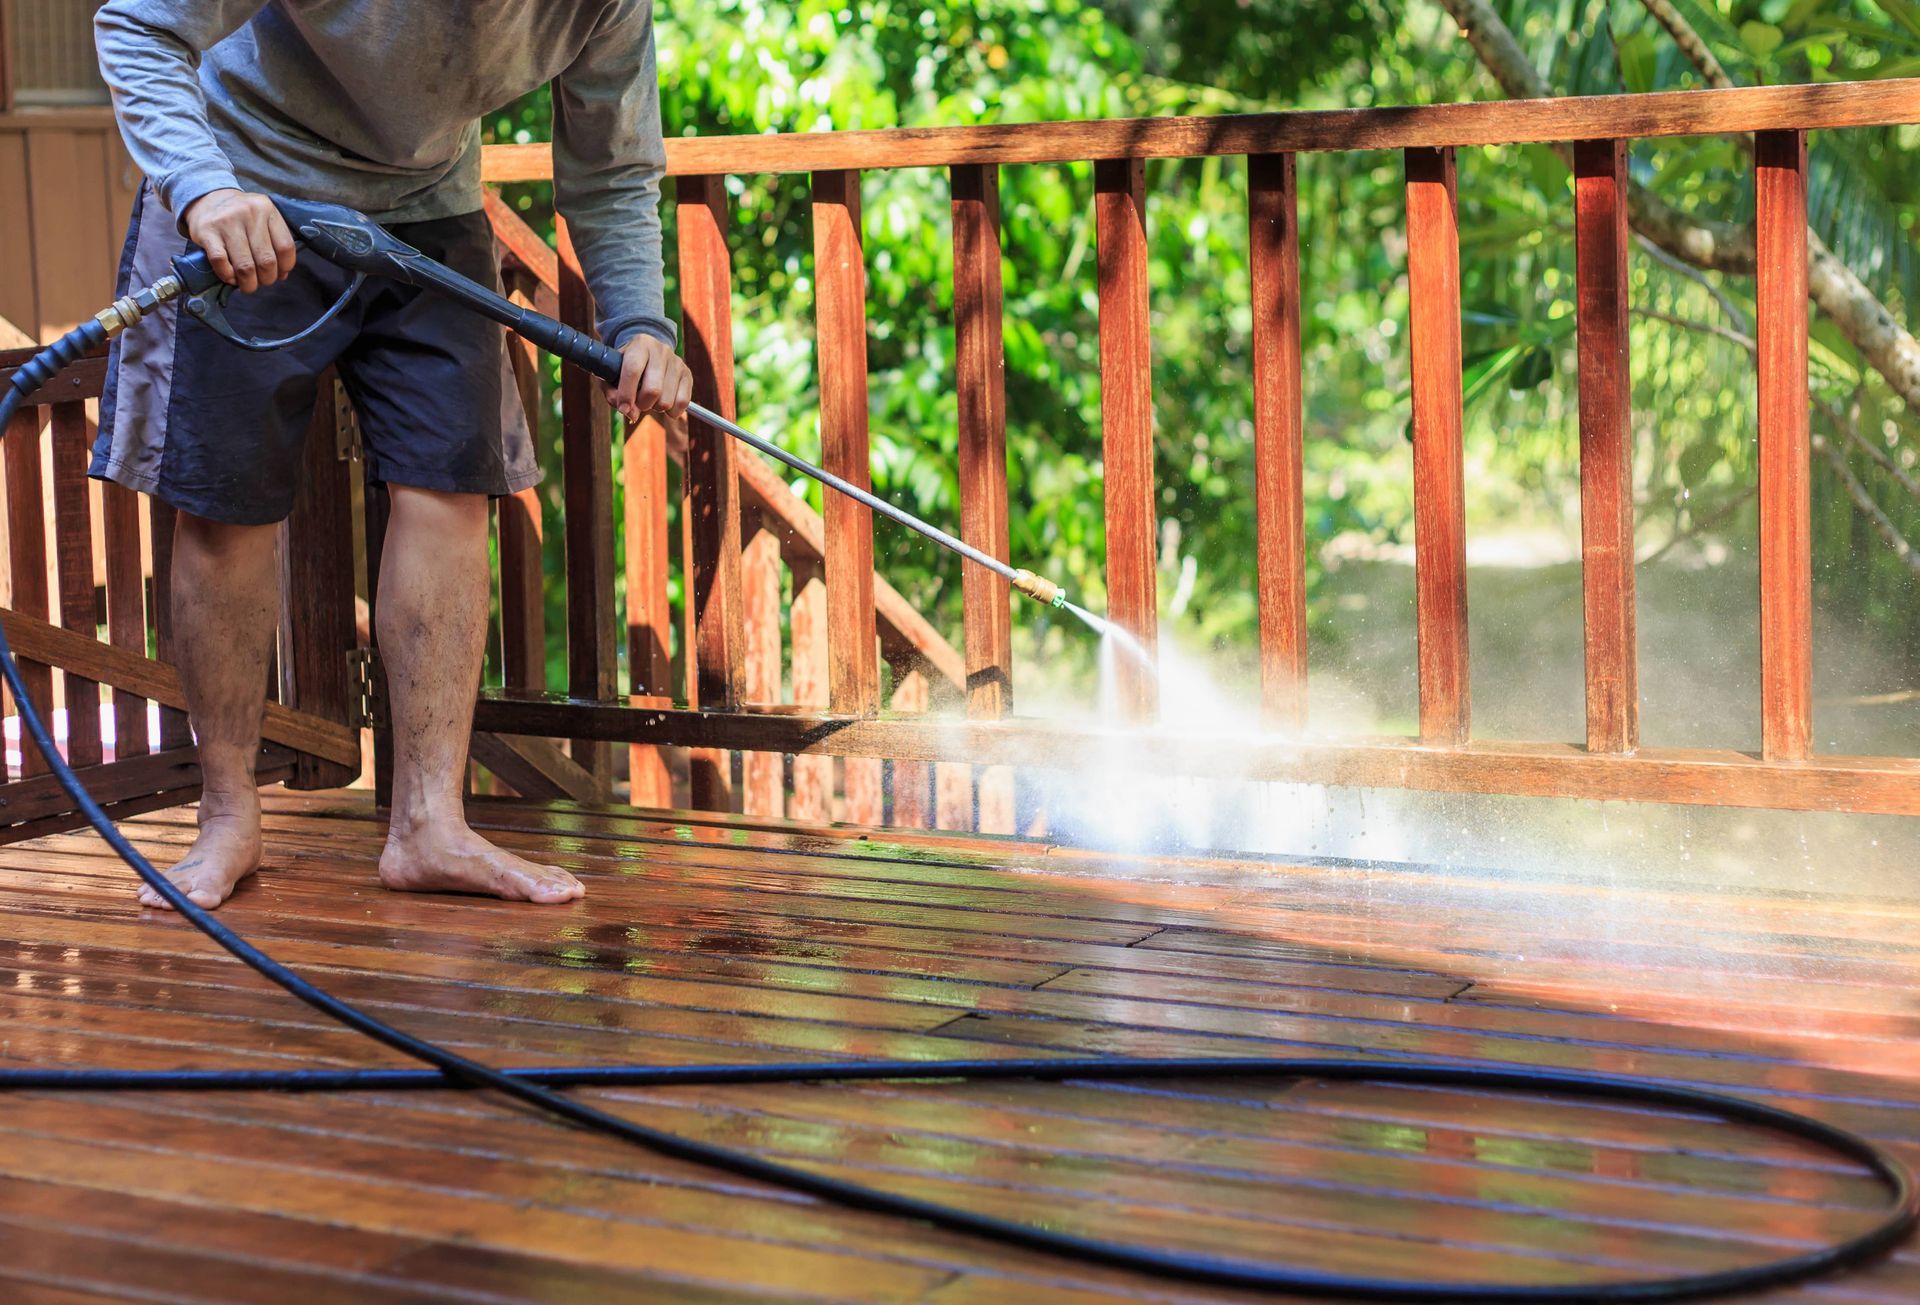 Man pressure washing wooden deck in backyard